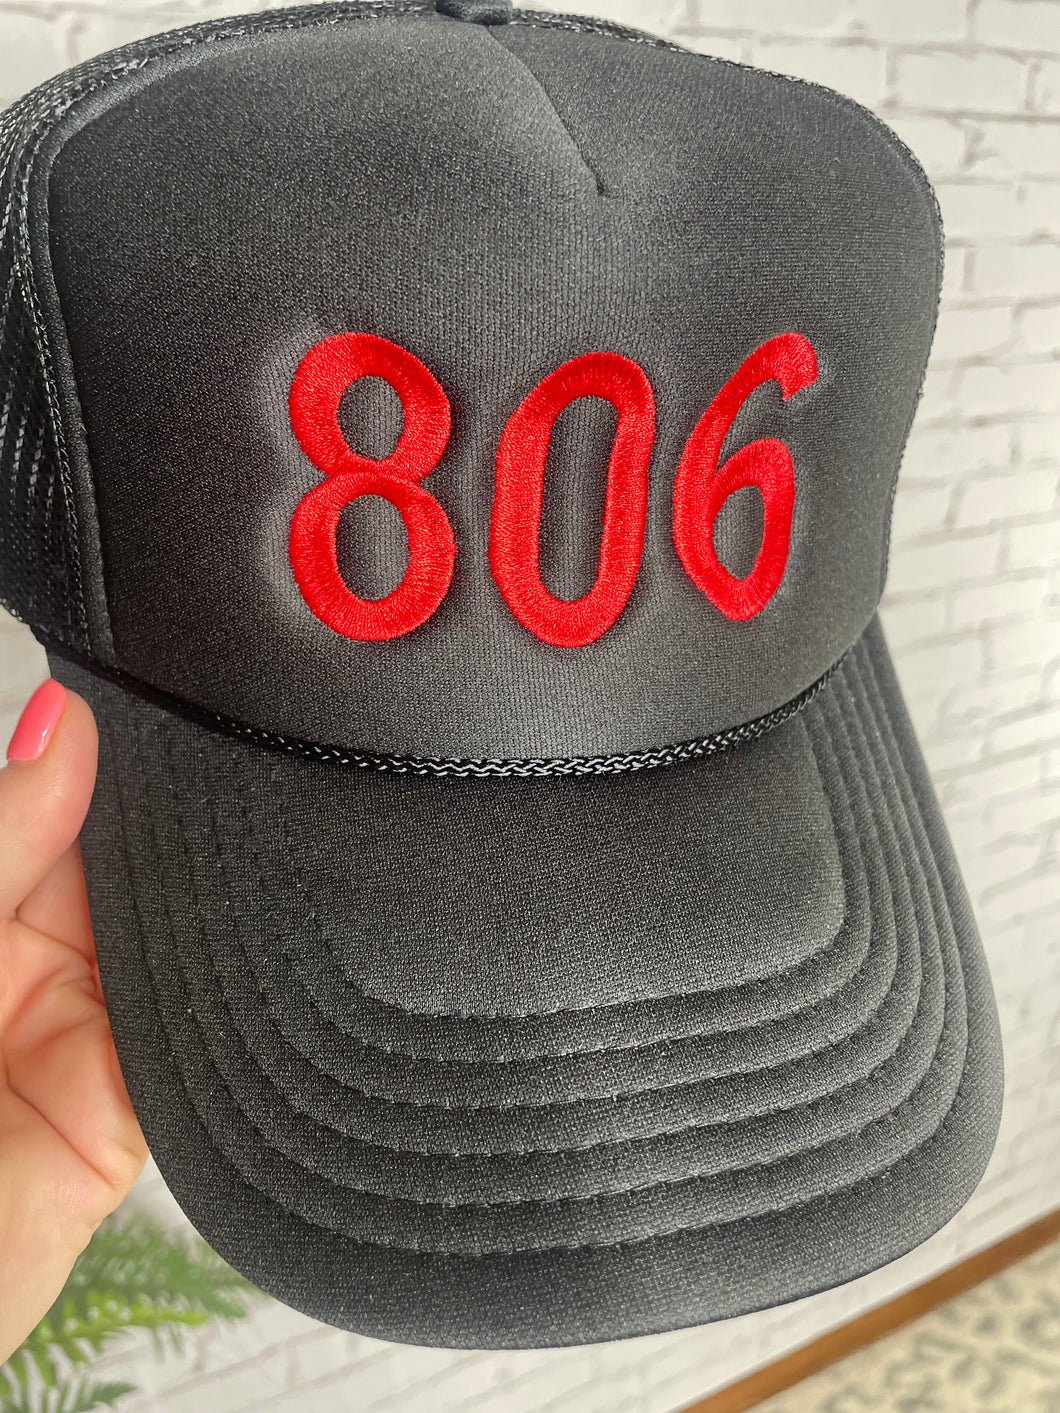 806 Trucker Hat(Black)